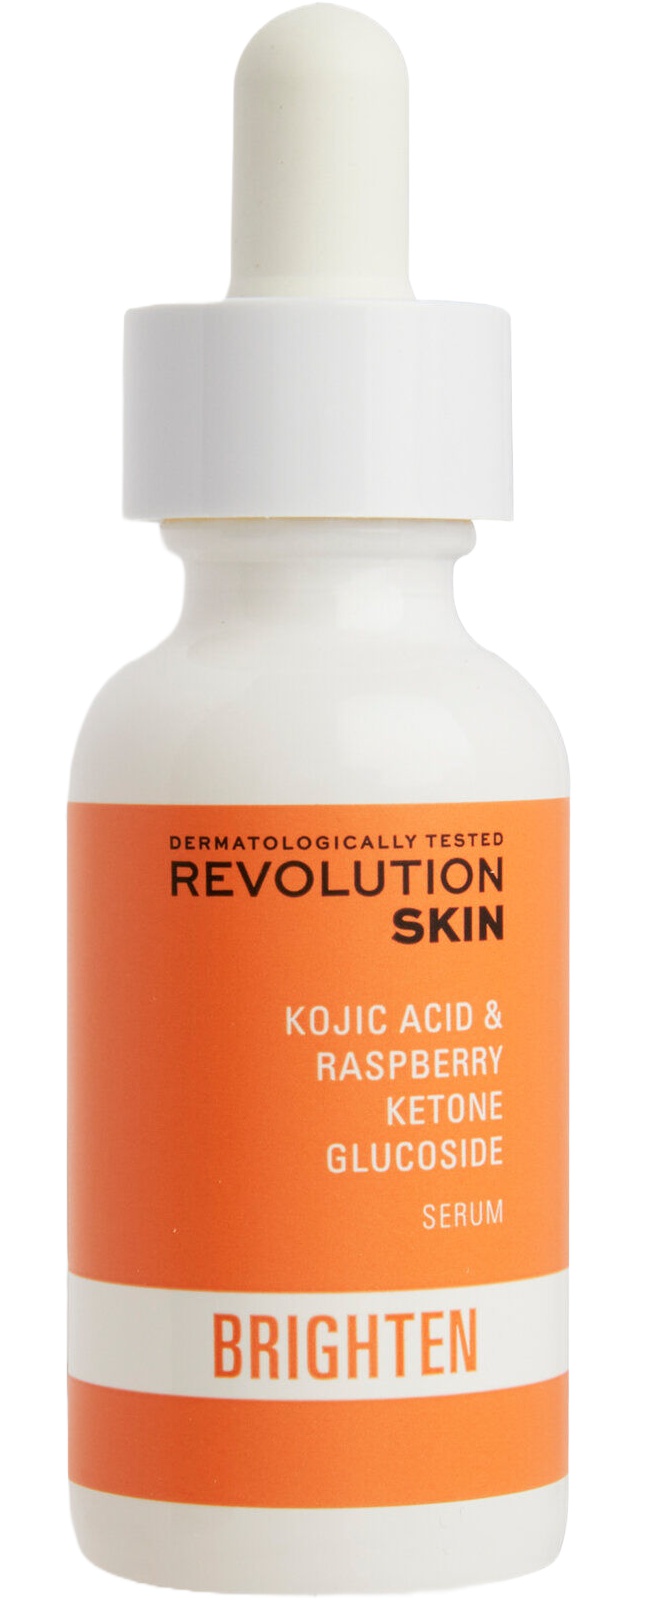 Revolution Skin Kojic Acid & Raspberry Ketone Glucoside Serum